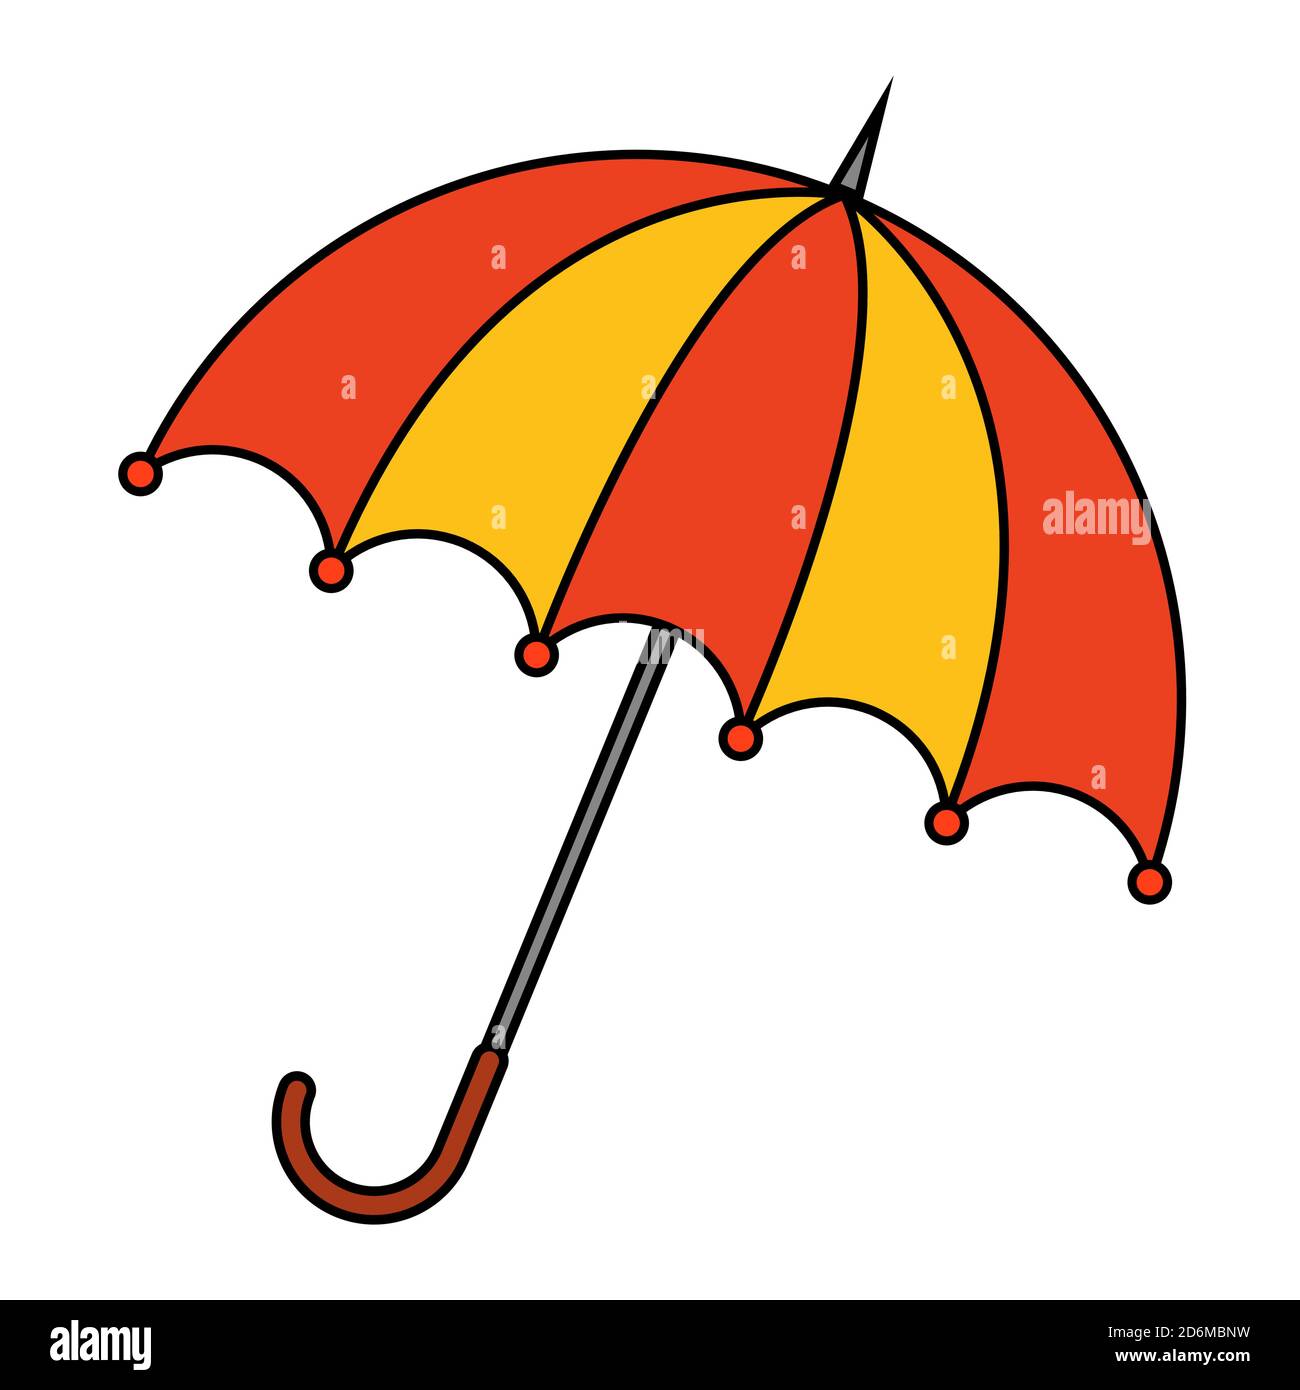 Parasol clip art isolated on white. Umbrella cartoon vector illustration.  Colorful seasonal design. Autumnal rain protection symbol. Autumn meteorolo  Stock Vector Image & Art - Alamy